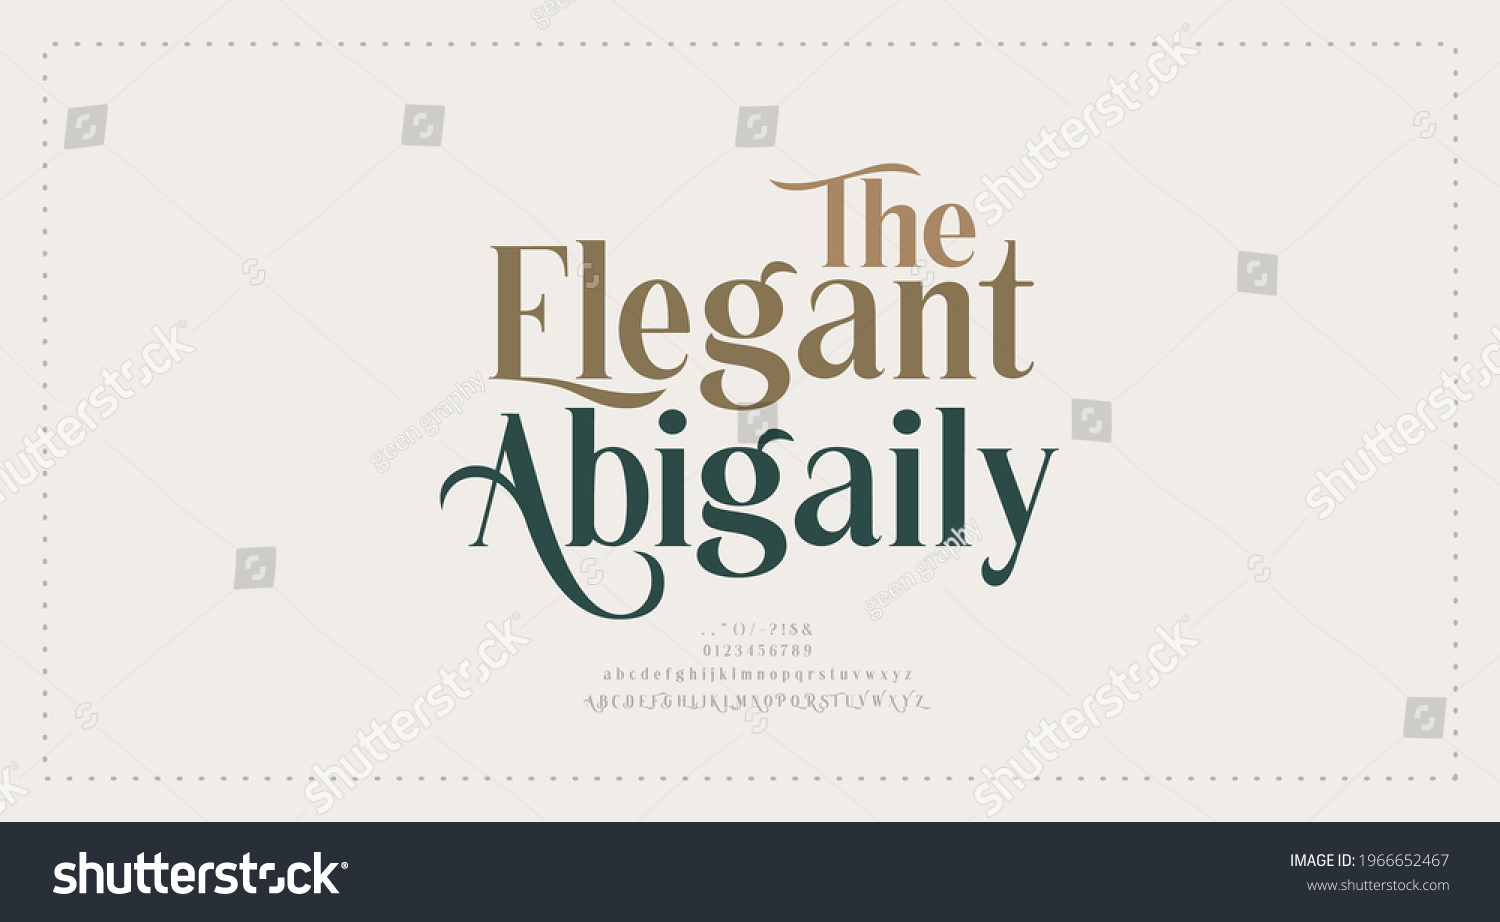 Elegant wedding alphabet letters font and number. Typography Luxury classic lettering serif fonts decorative vintage retro concept. vector illustration #1966652467